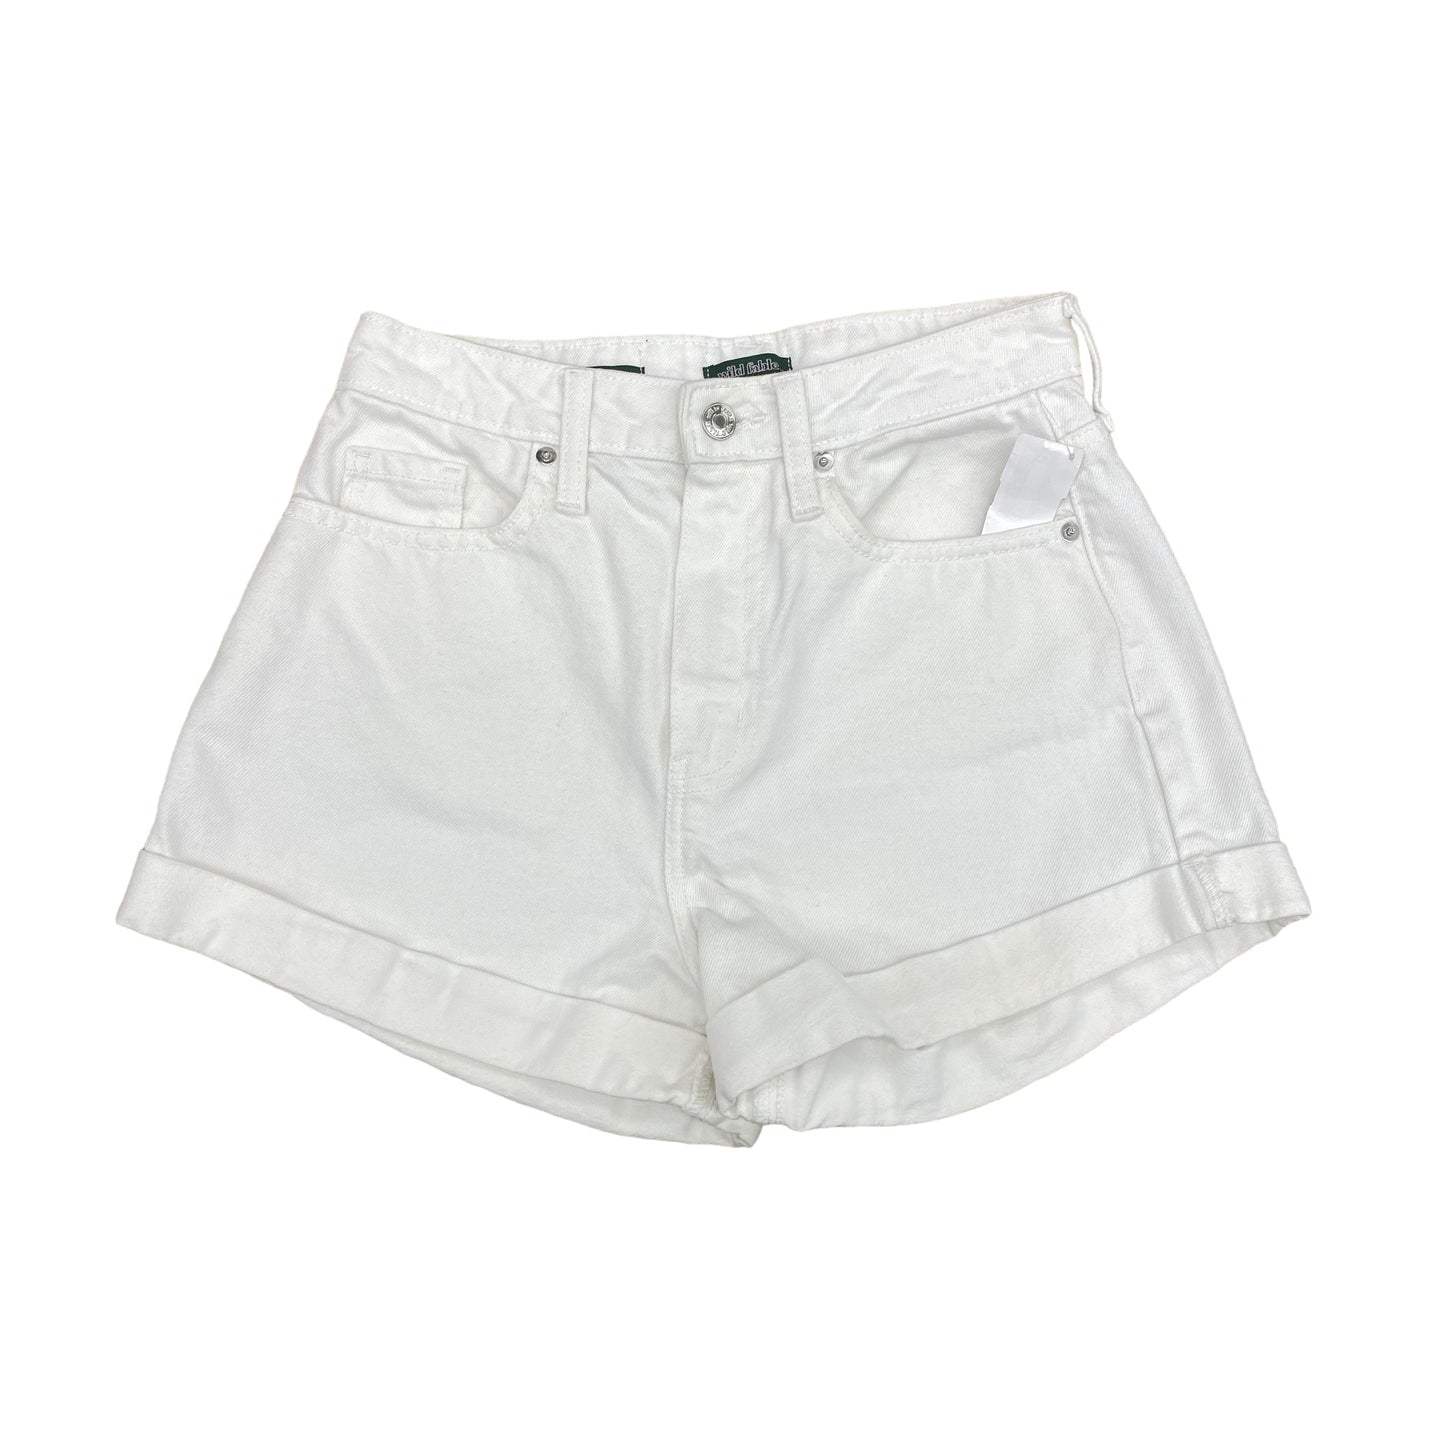 White Shorts Wild Fable, Size 2